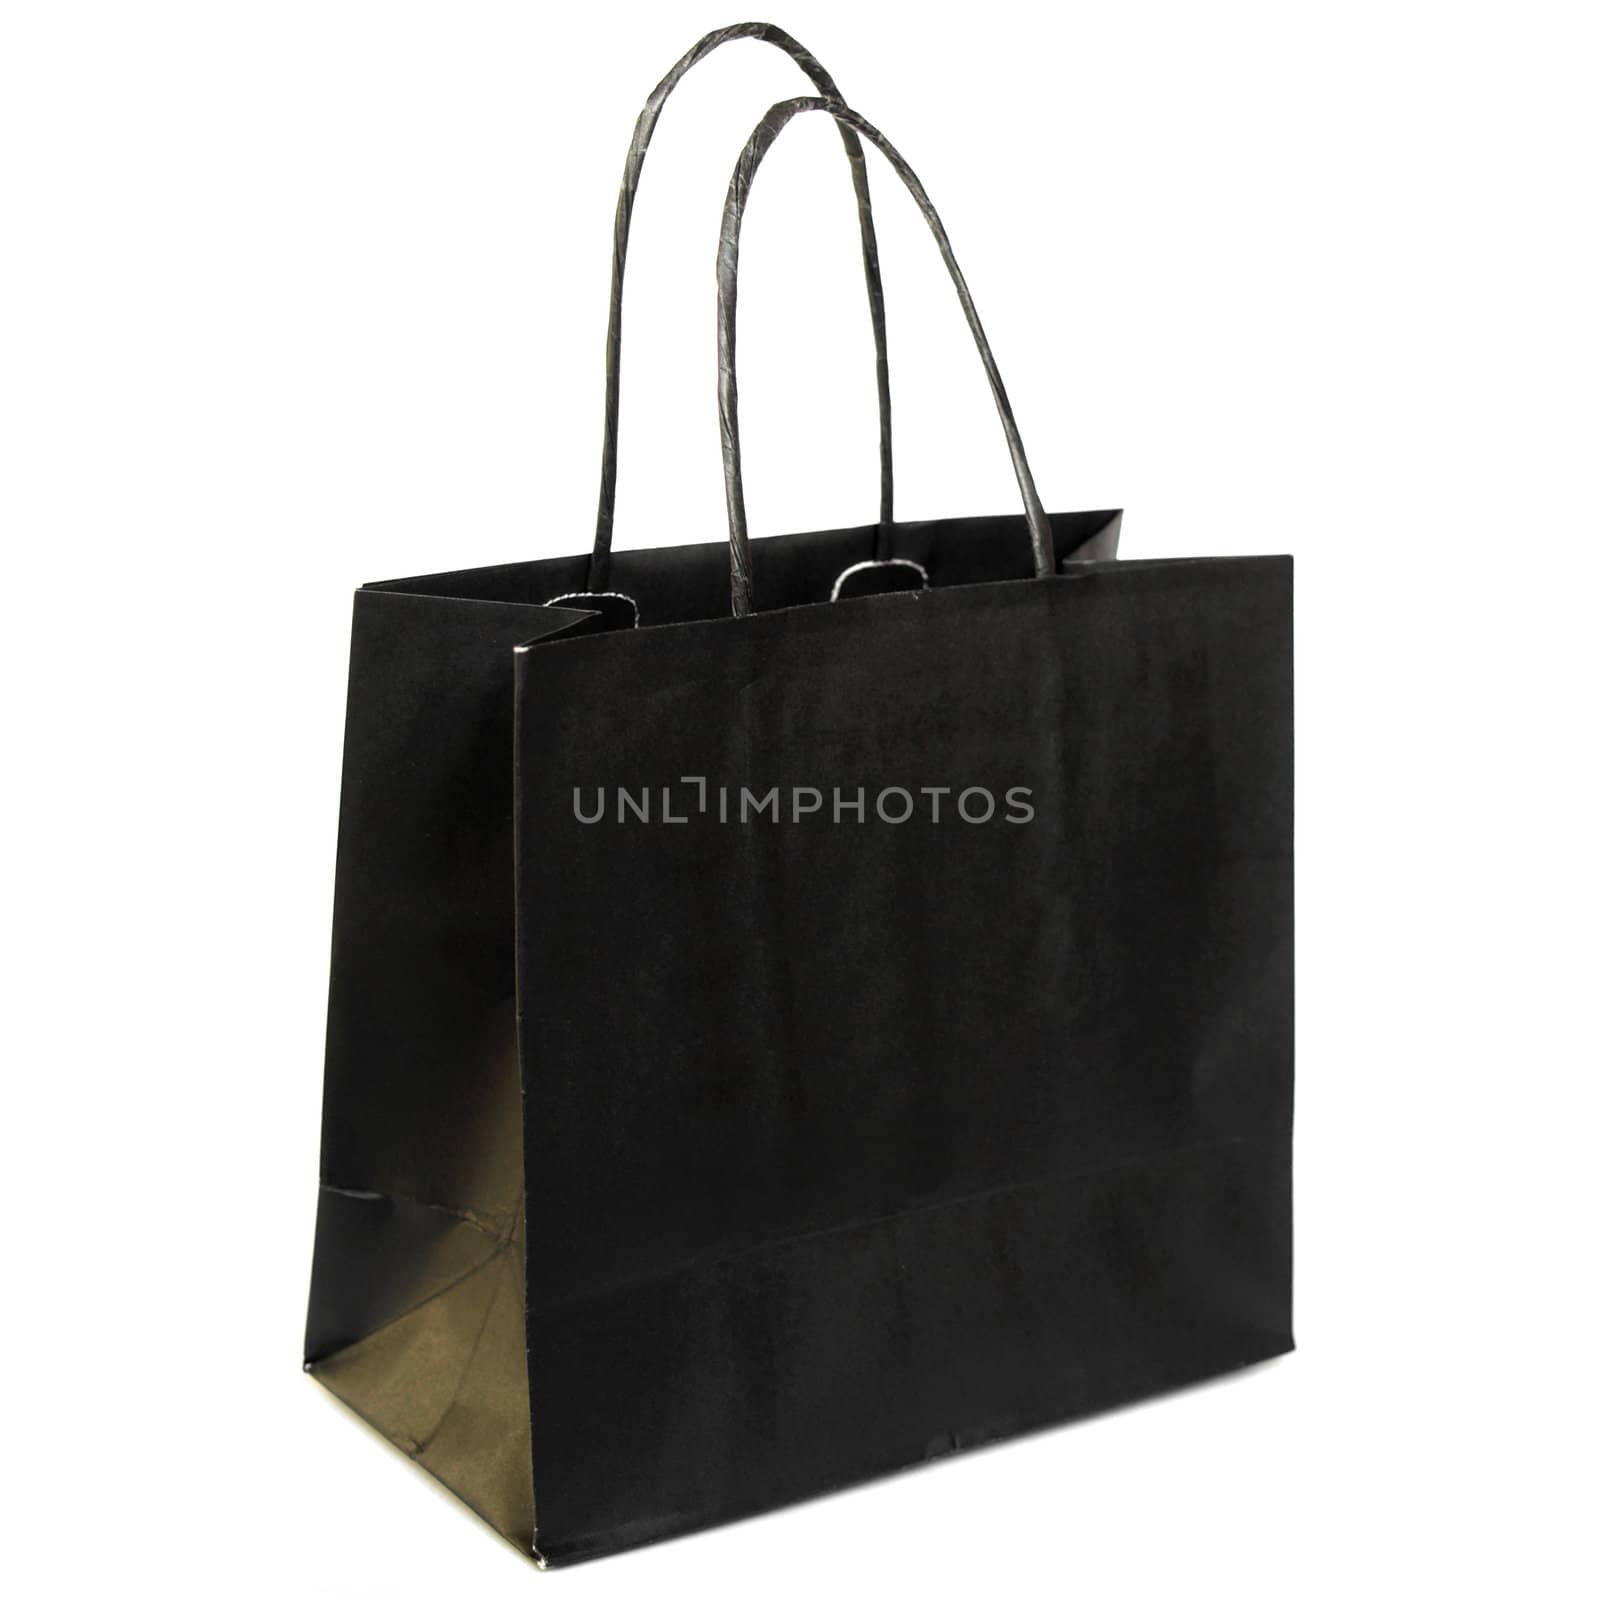 Black paper bag shopper isolated on white background